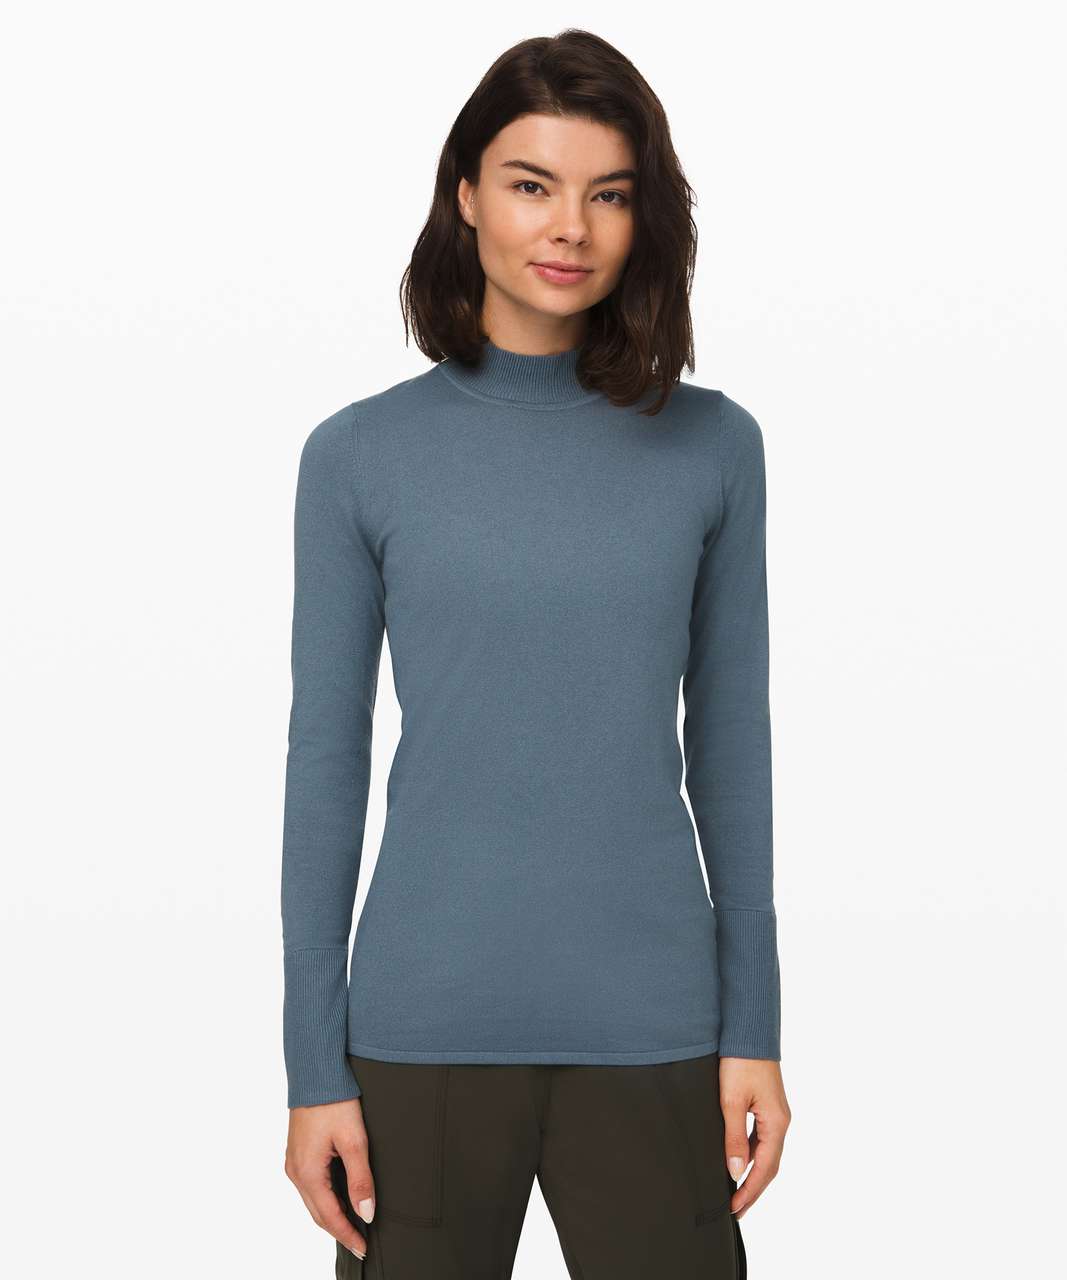 Lululemon Stand Steady Mock Neck Sweater - Blue Charcoal